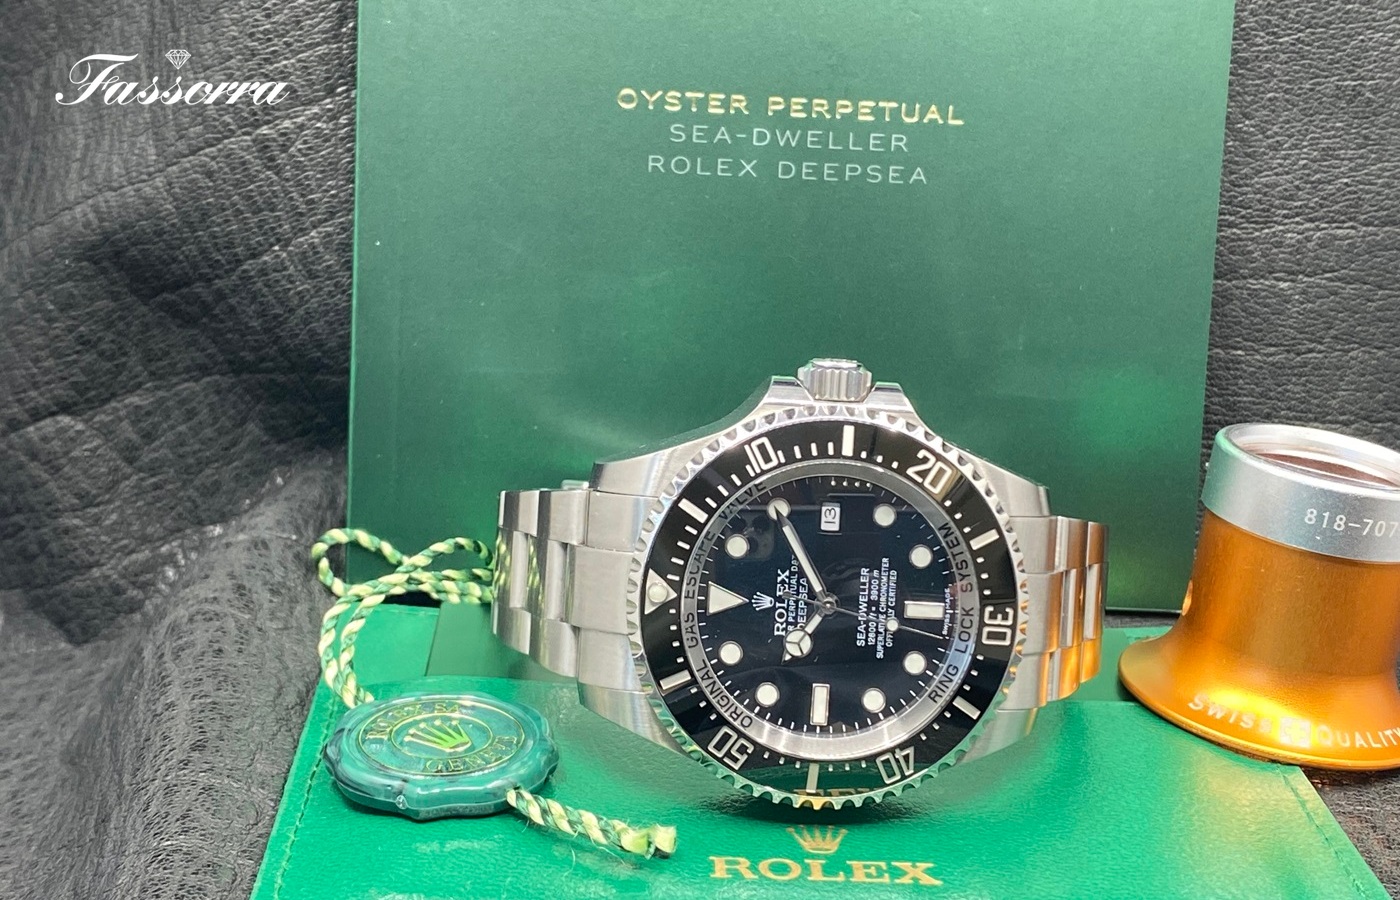 Rolex Deepsea Sea-Dweller